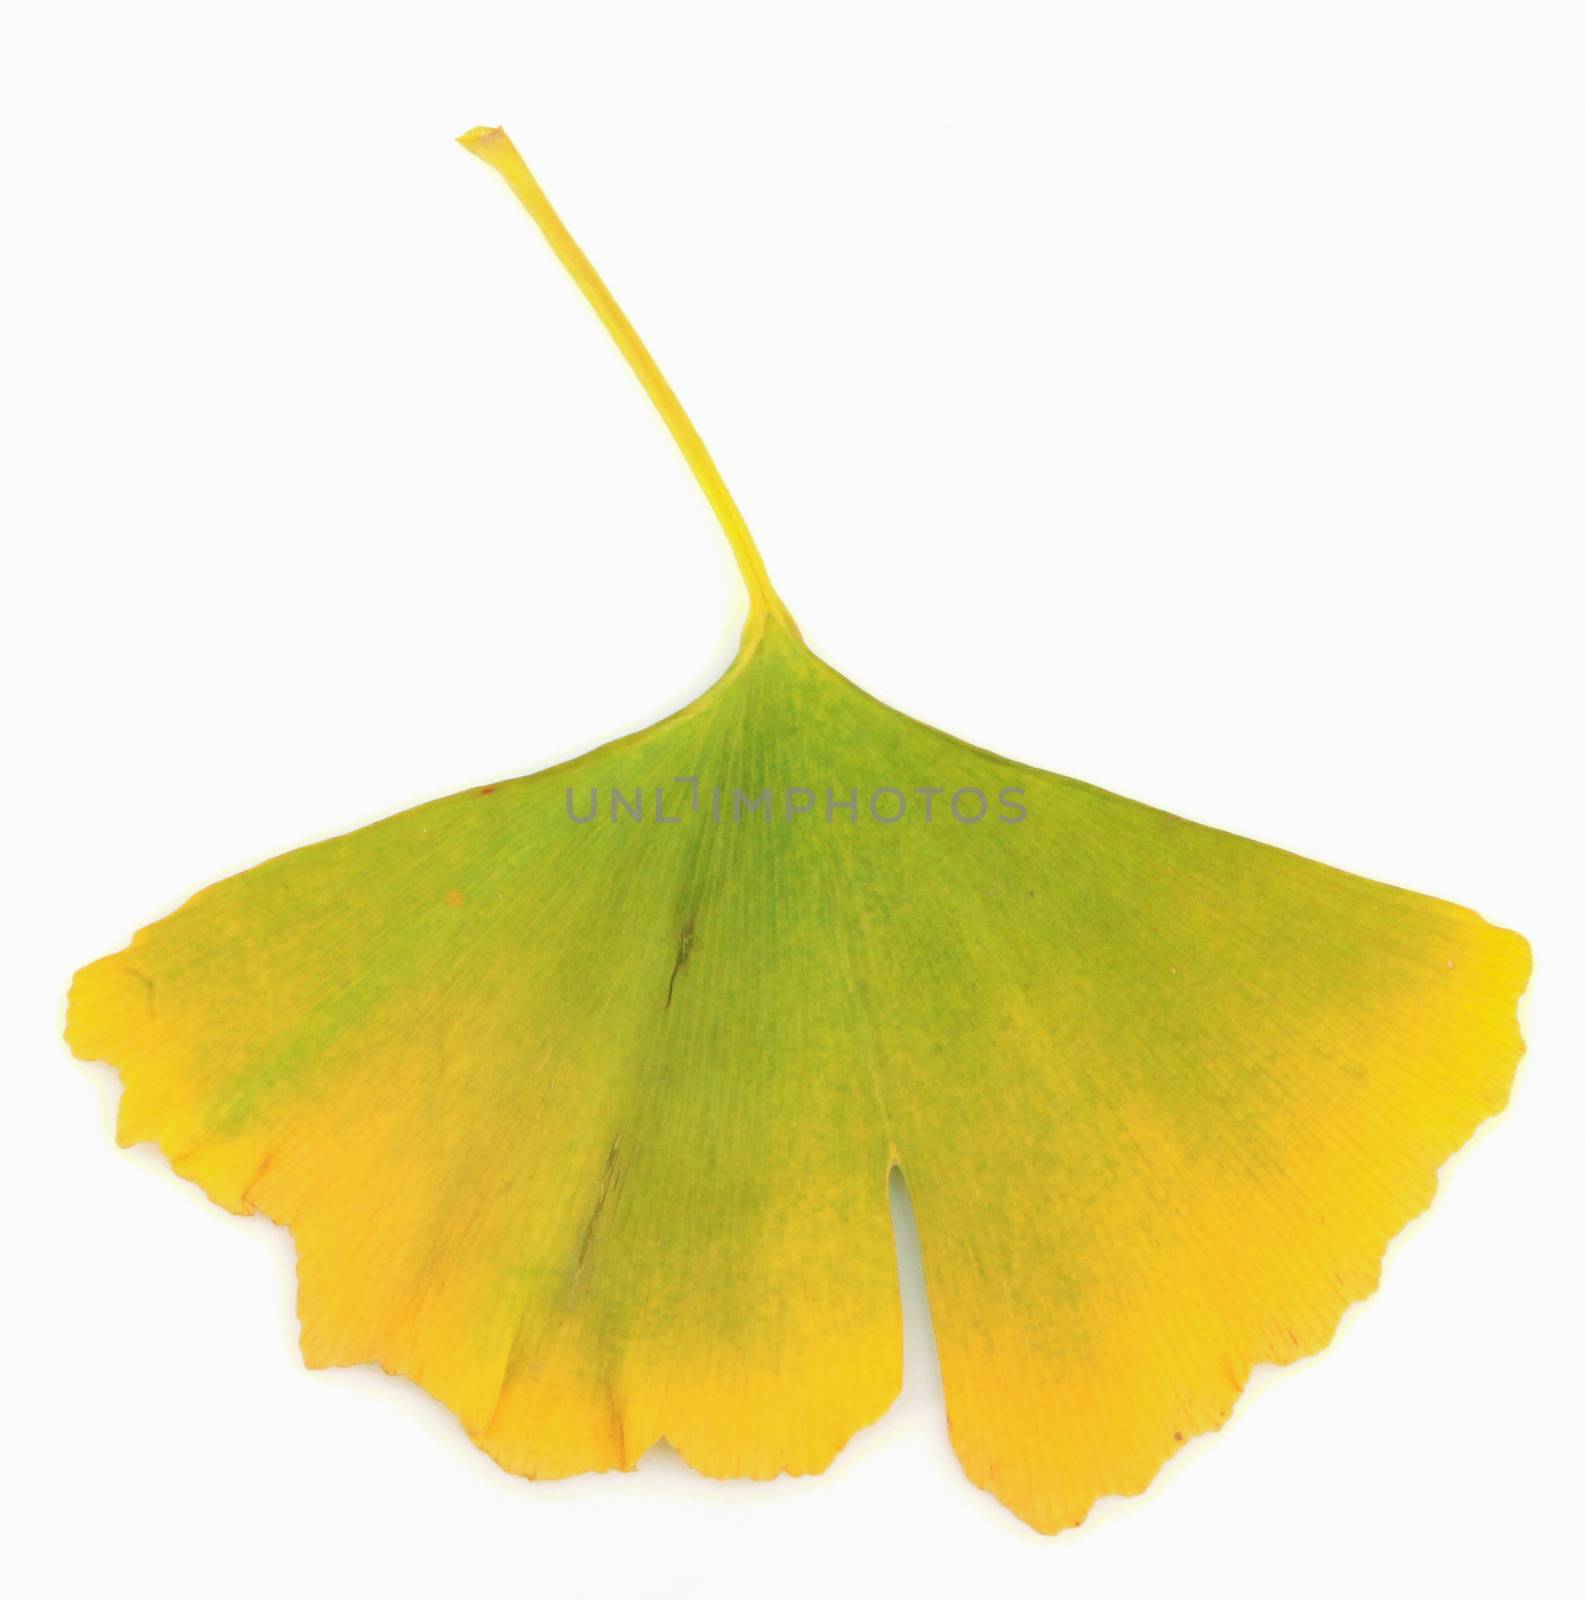 Ginkgo leaf isolated on white background.